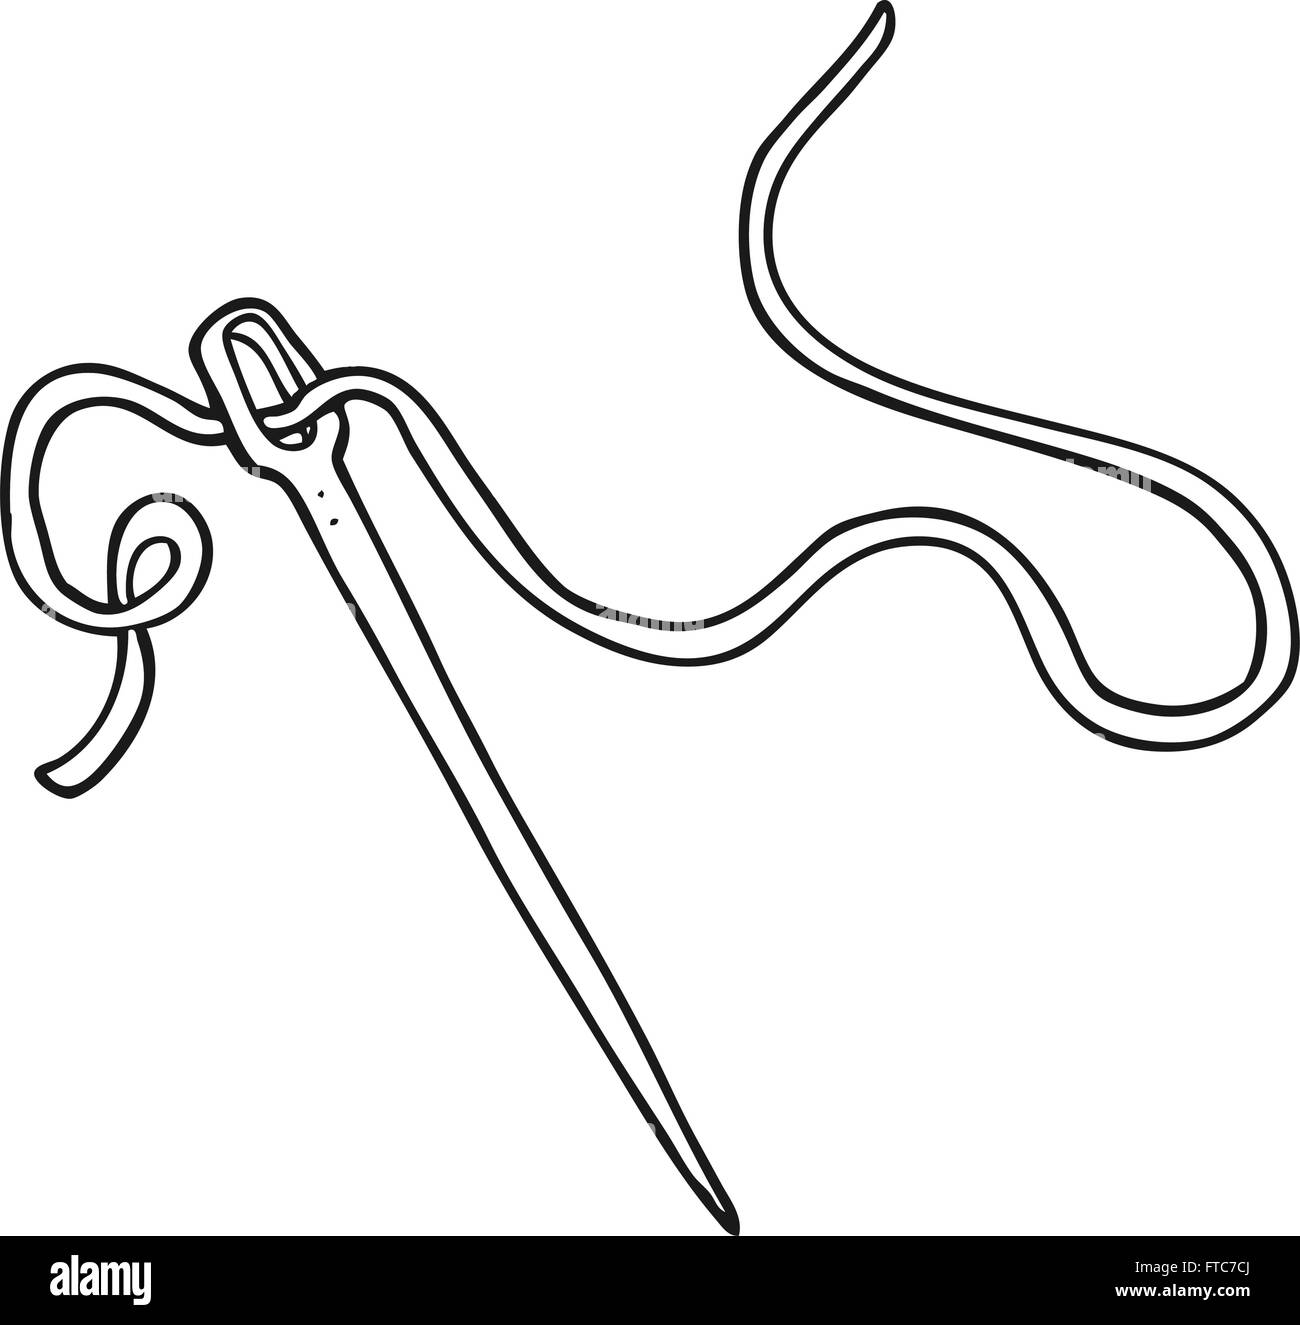 péndulo abrazo equilibrado Blanco y negro dibujado a mano alzada aguja e hilo de dibujos animados  Imagen Vector de stock - Alamy